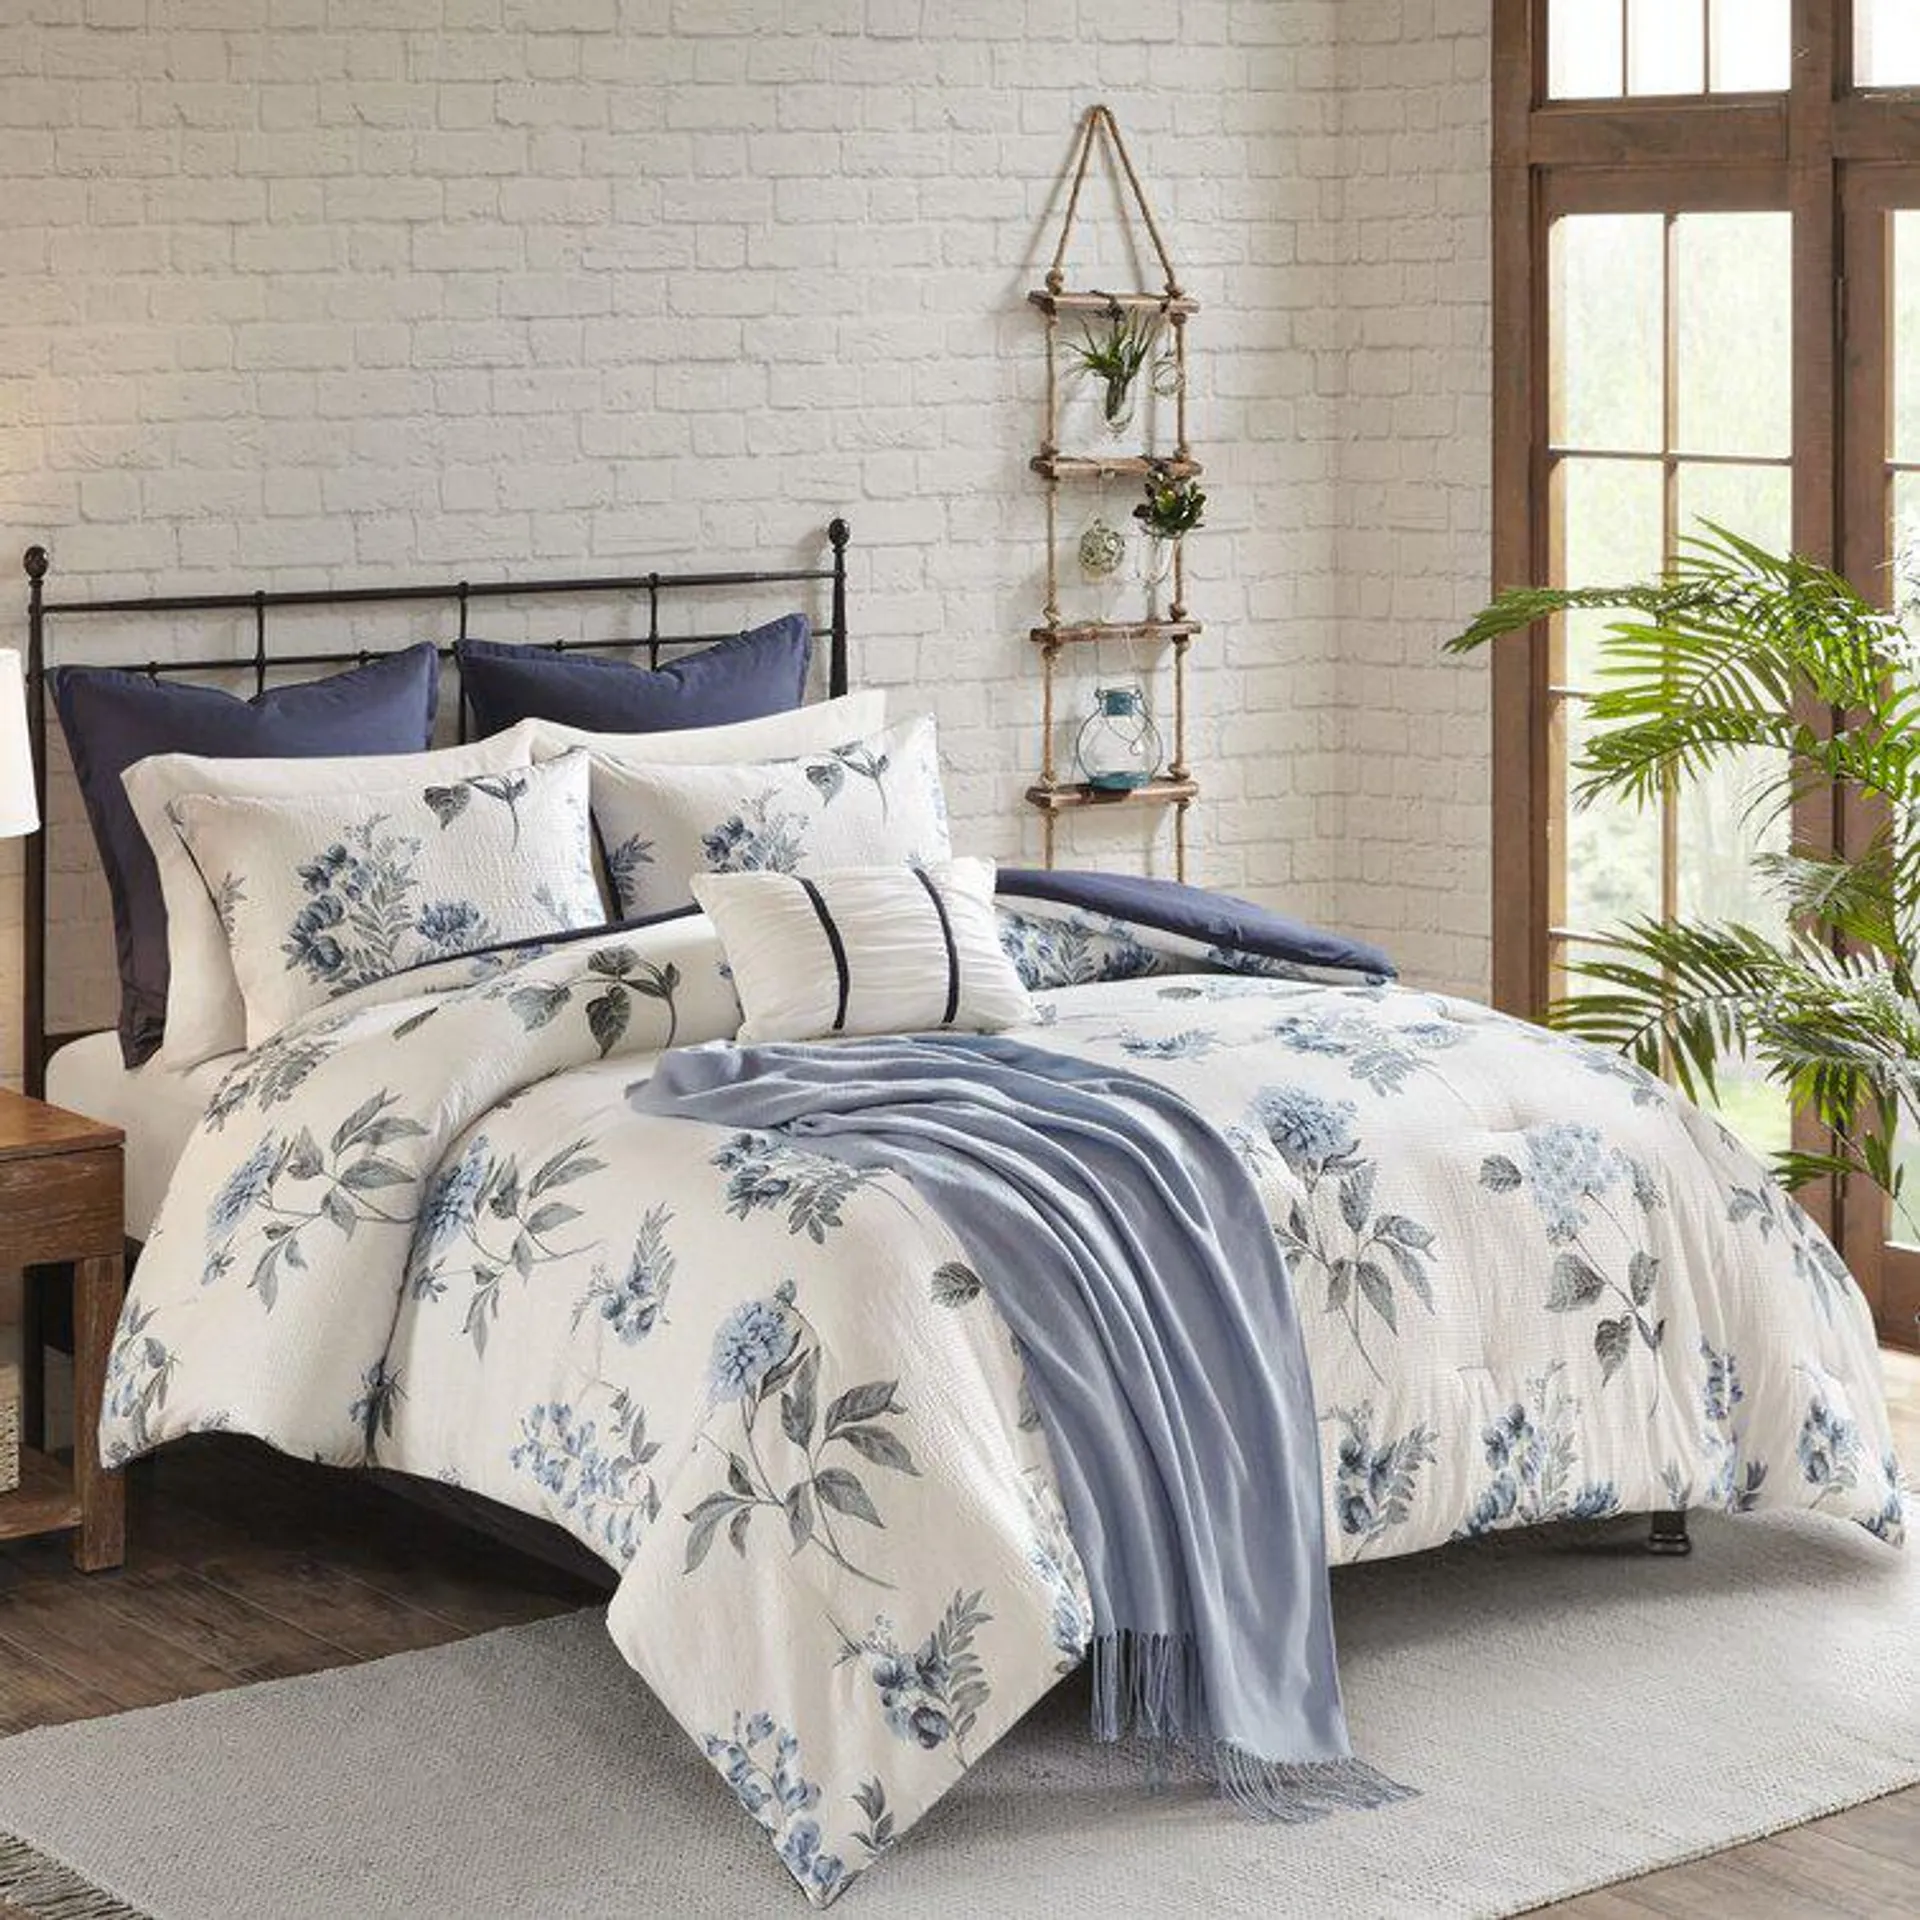 Mondale All Over Floral Seersucker 7 Piece Comforter Set with Throw Blanket